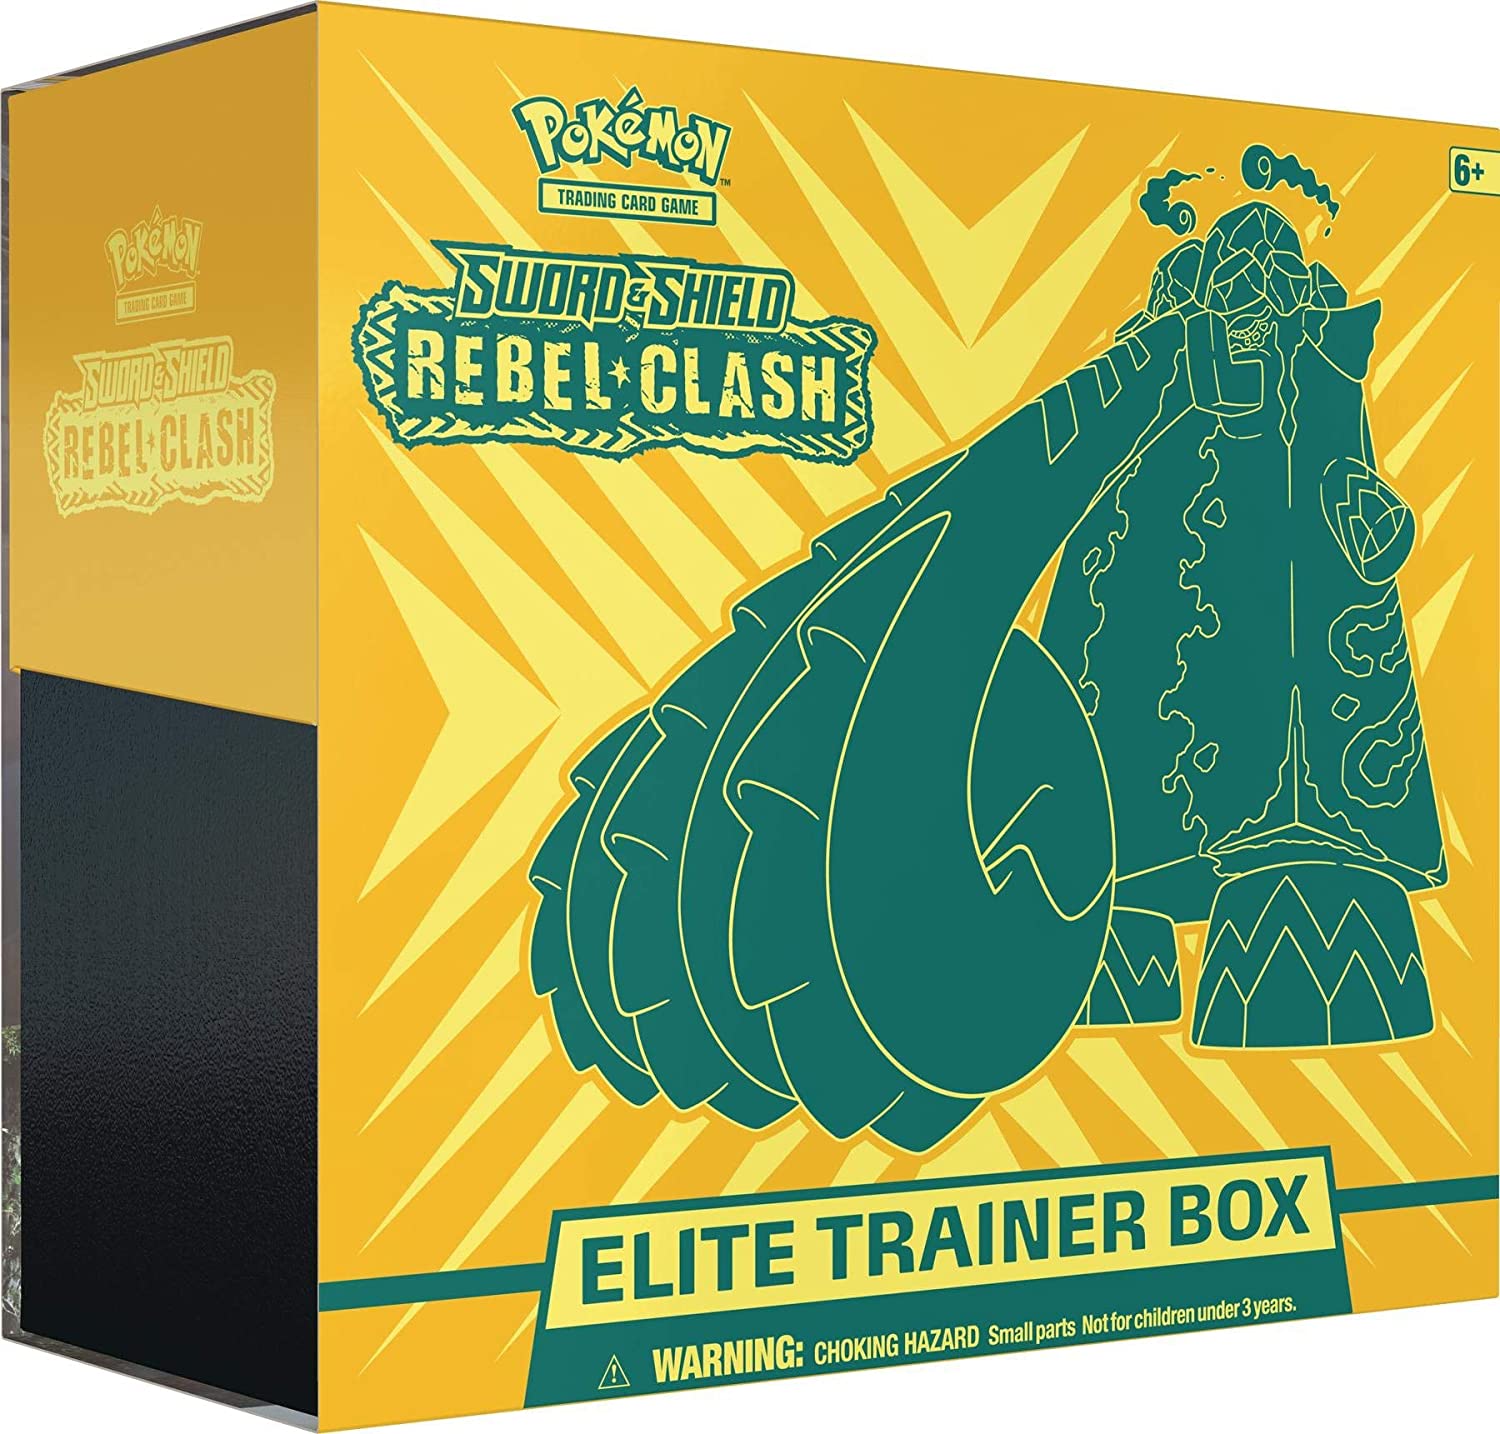 Sword and Shield Rebel Clash Pokémon Elite Trainer Box | D20 Games